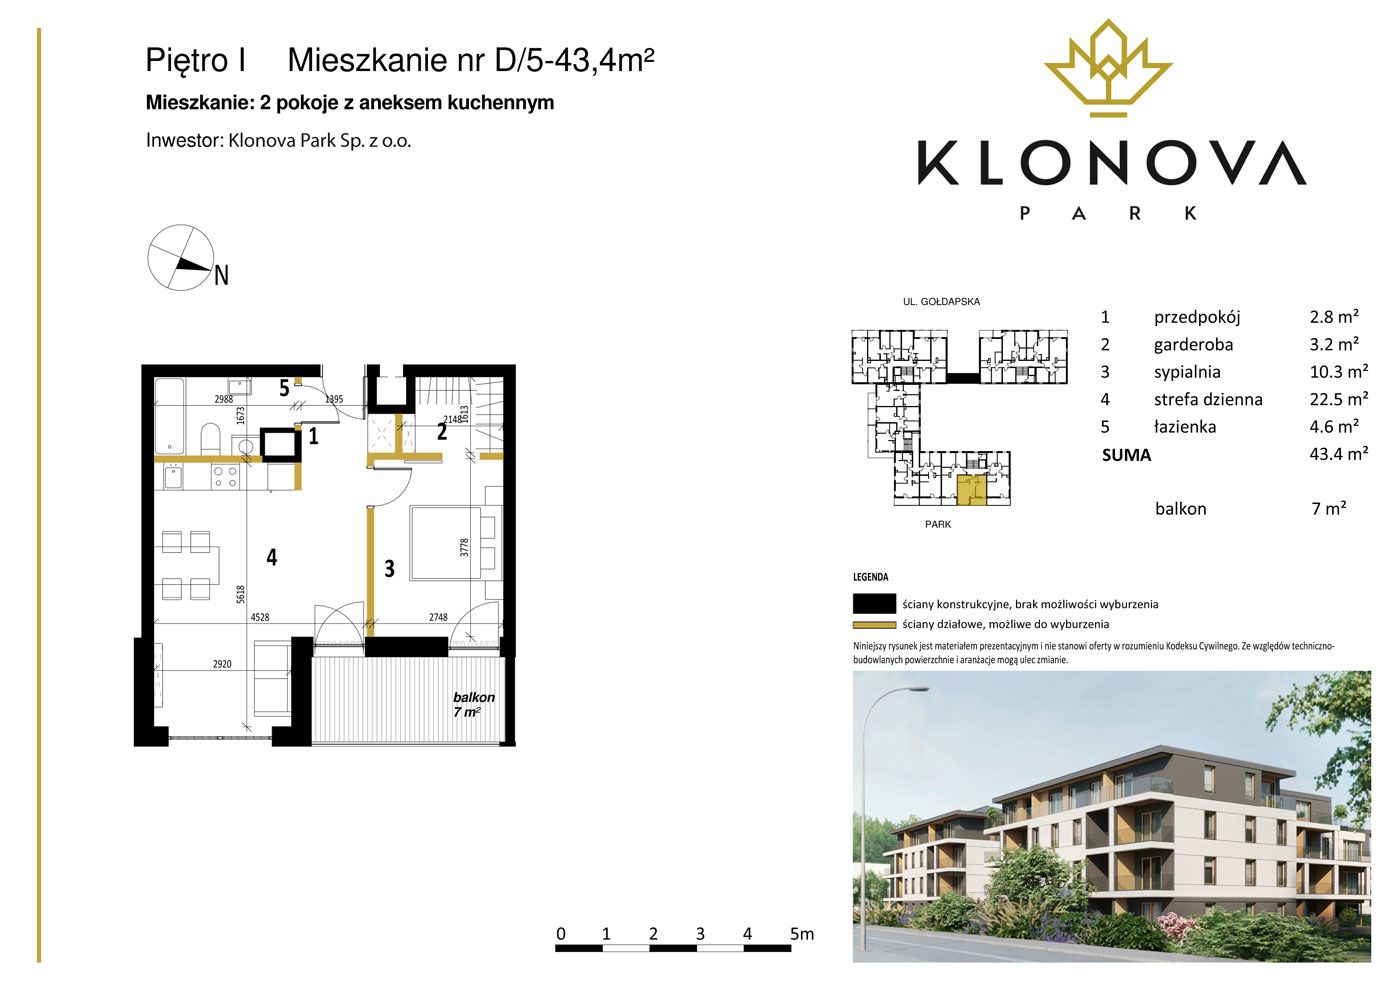 Apartamenty Klonova Park - Plan mieszkania D/5